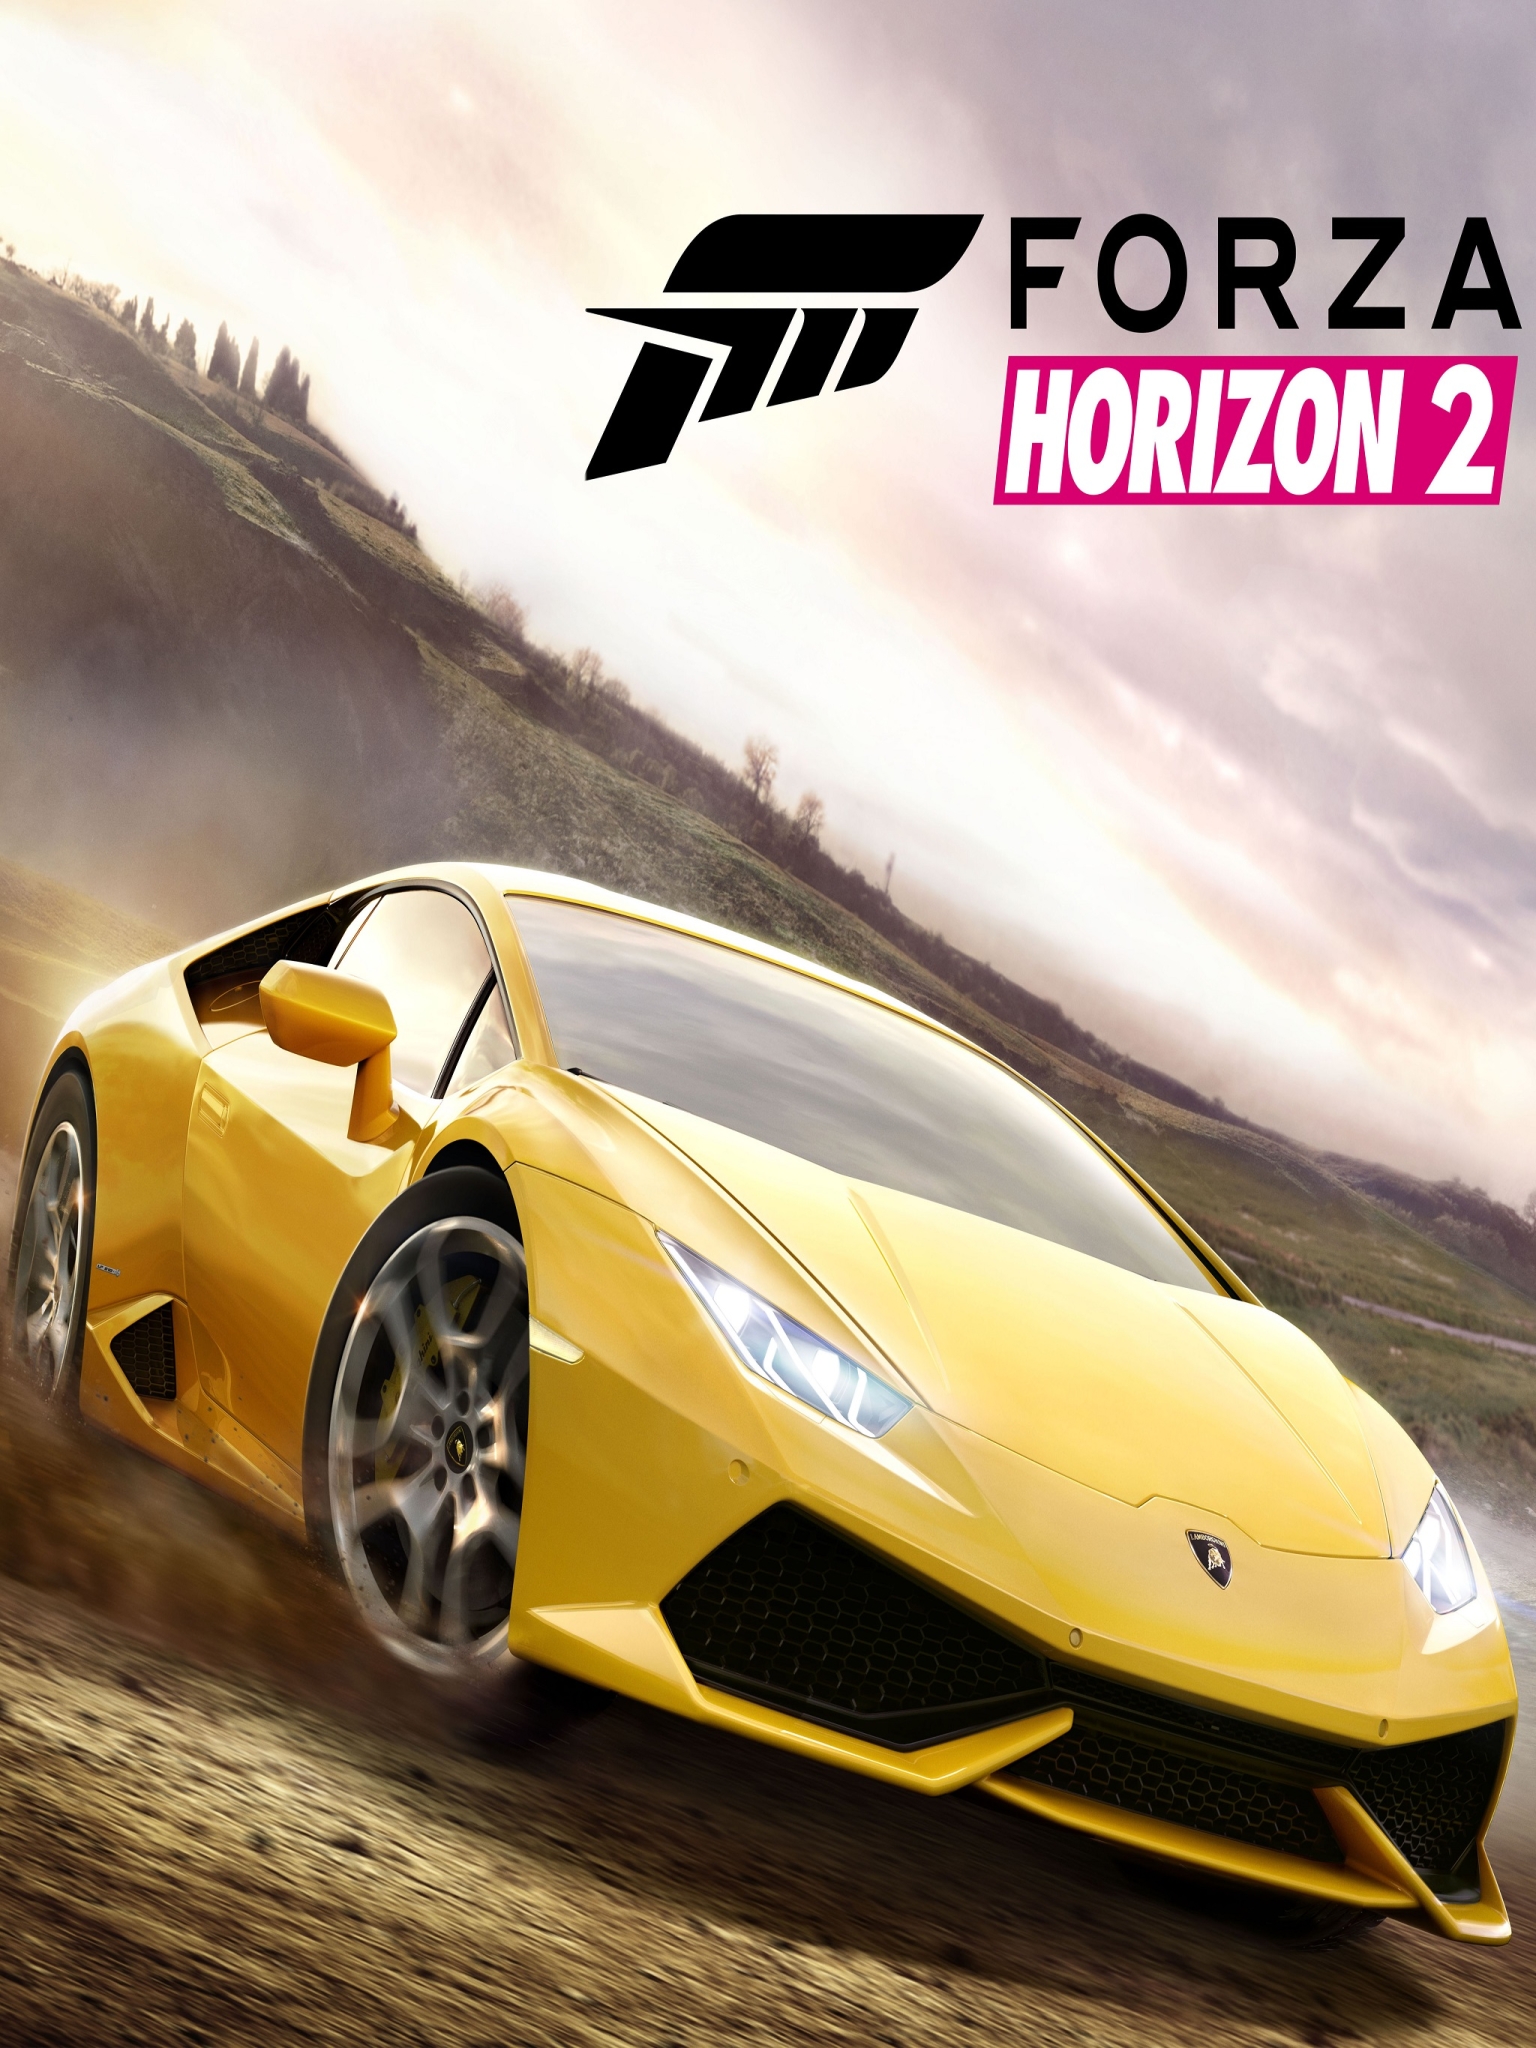 Forza Horizon 2 for Apple iPad Air 2 resolution